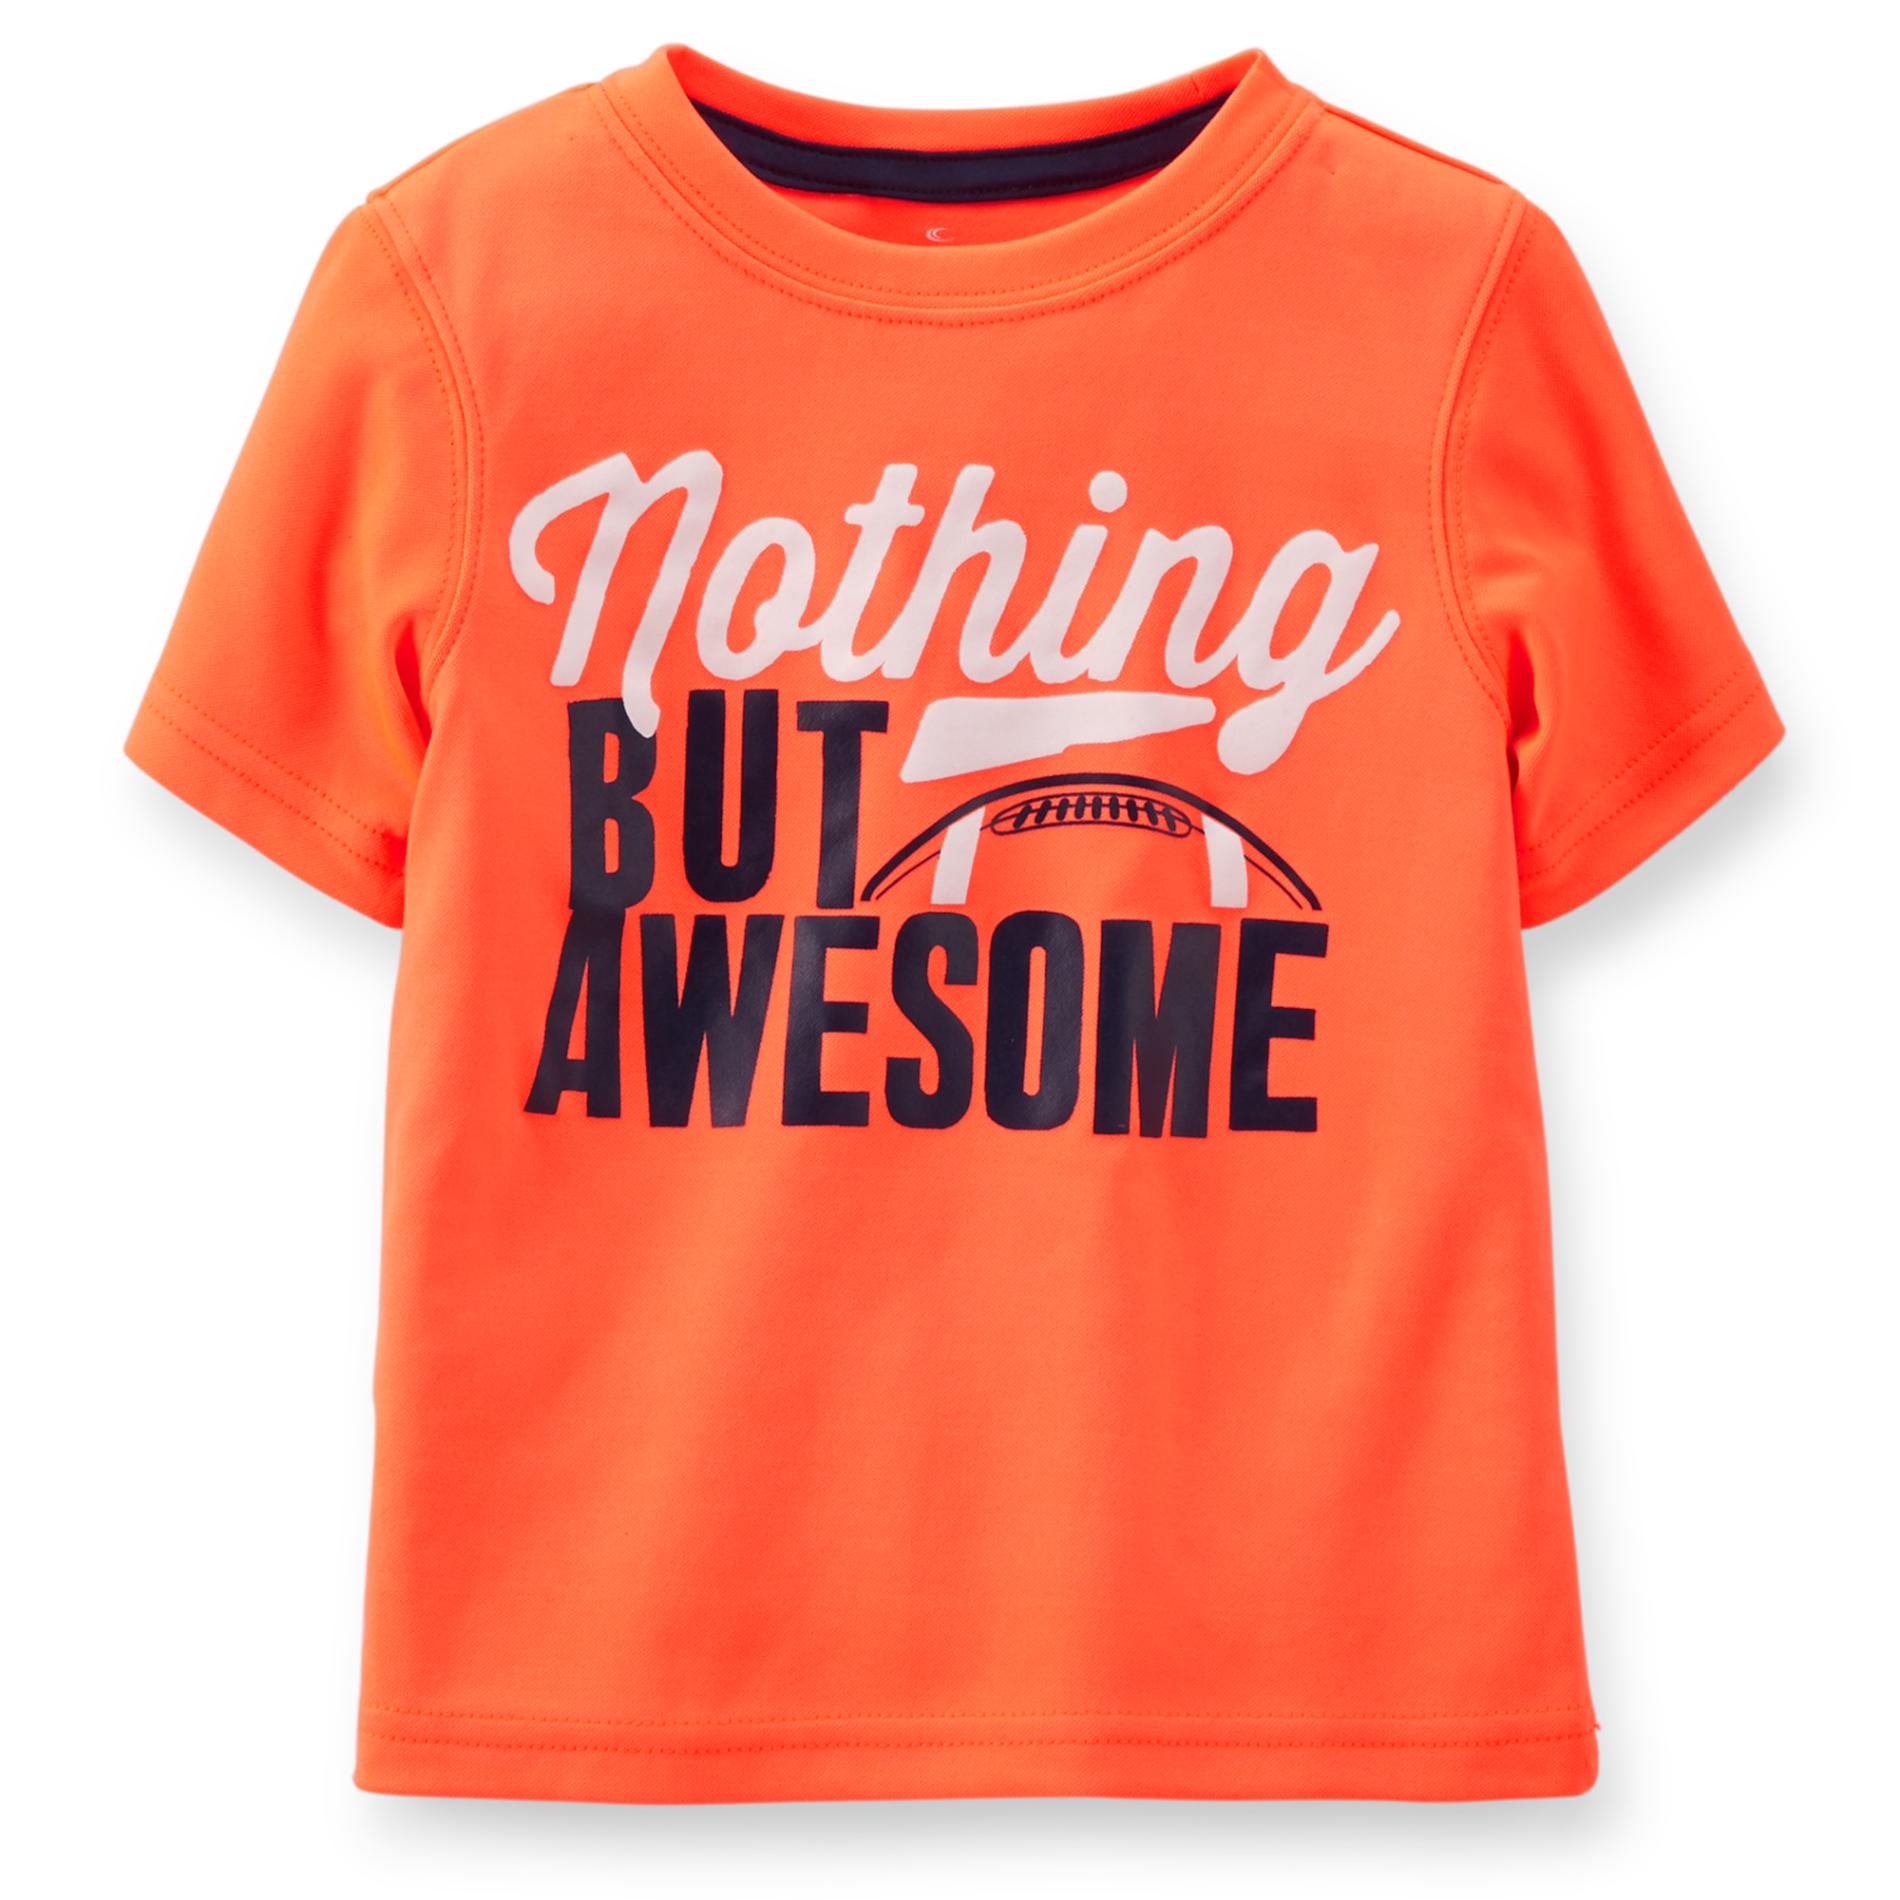 Toddler Boy's Graphic T-Shirt - Football